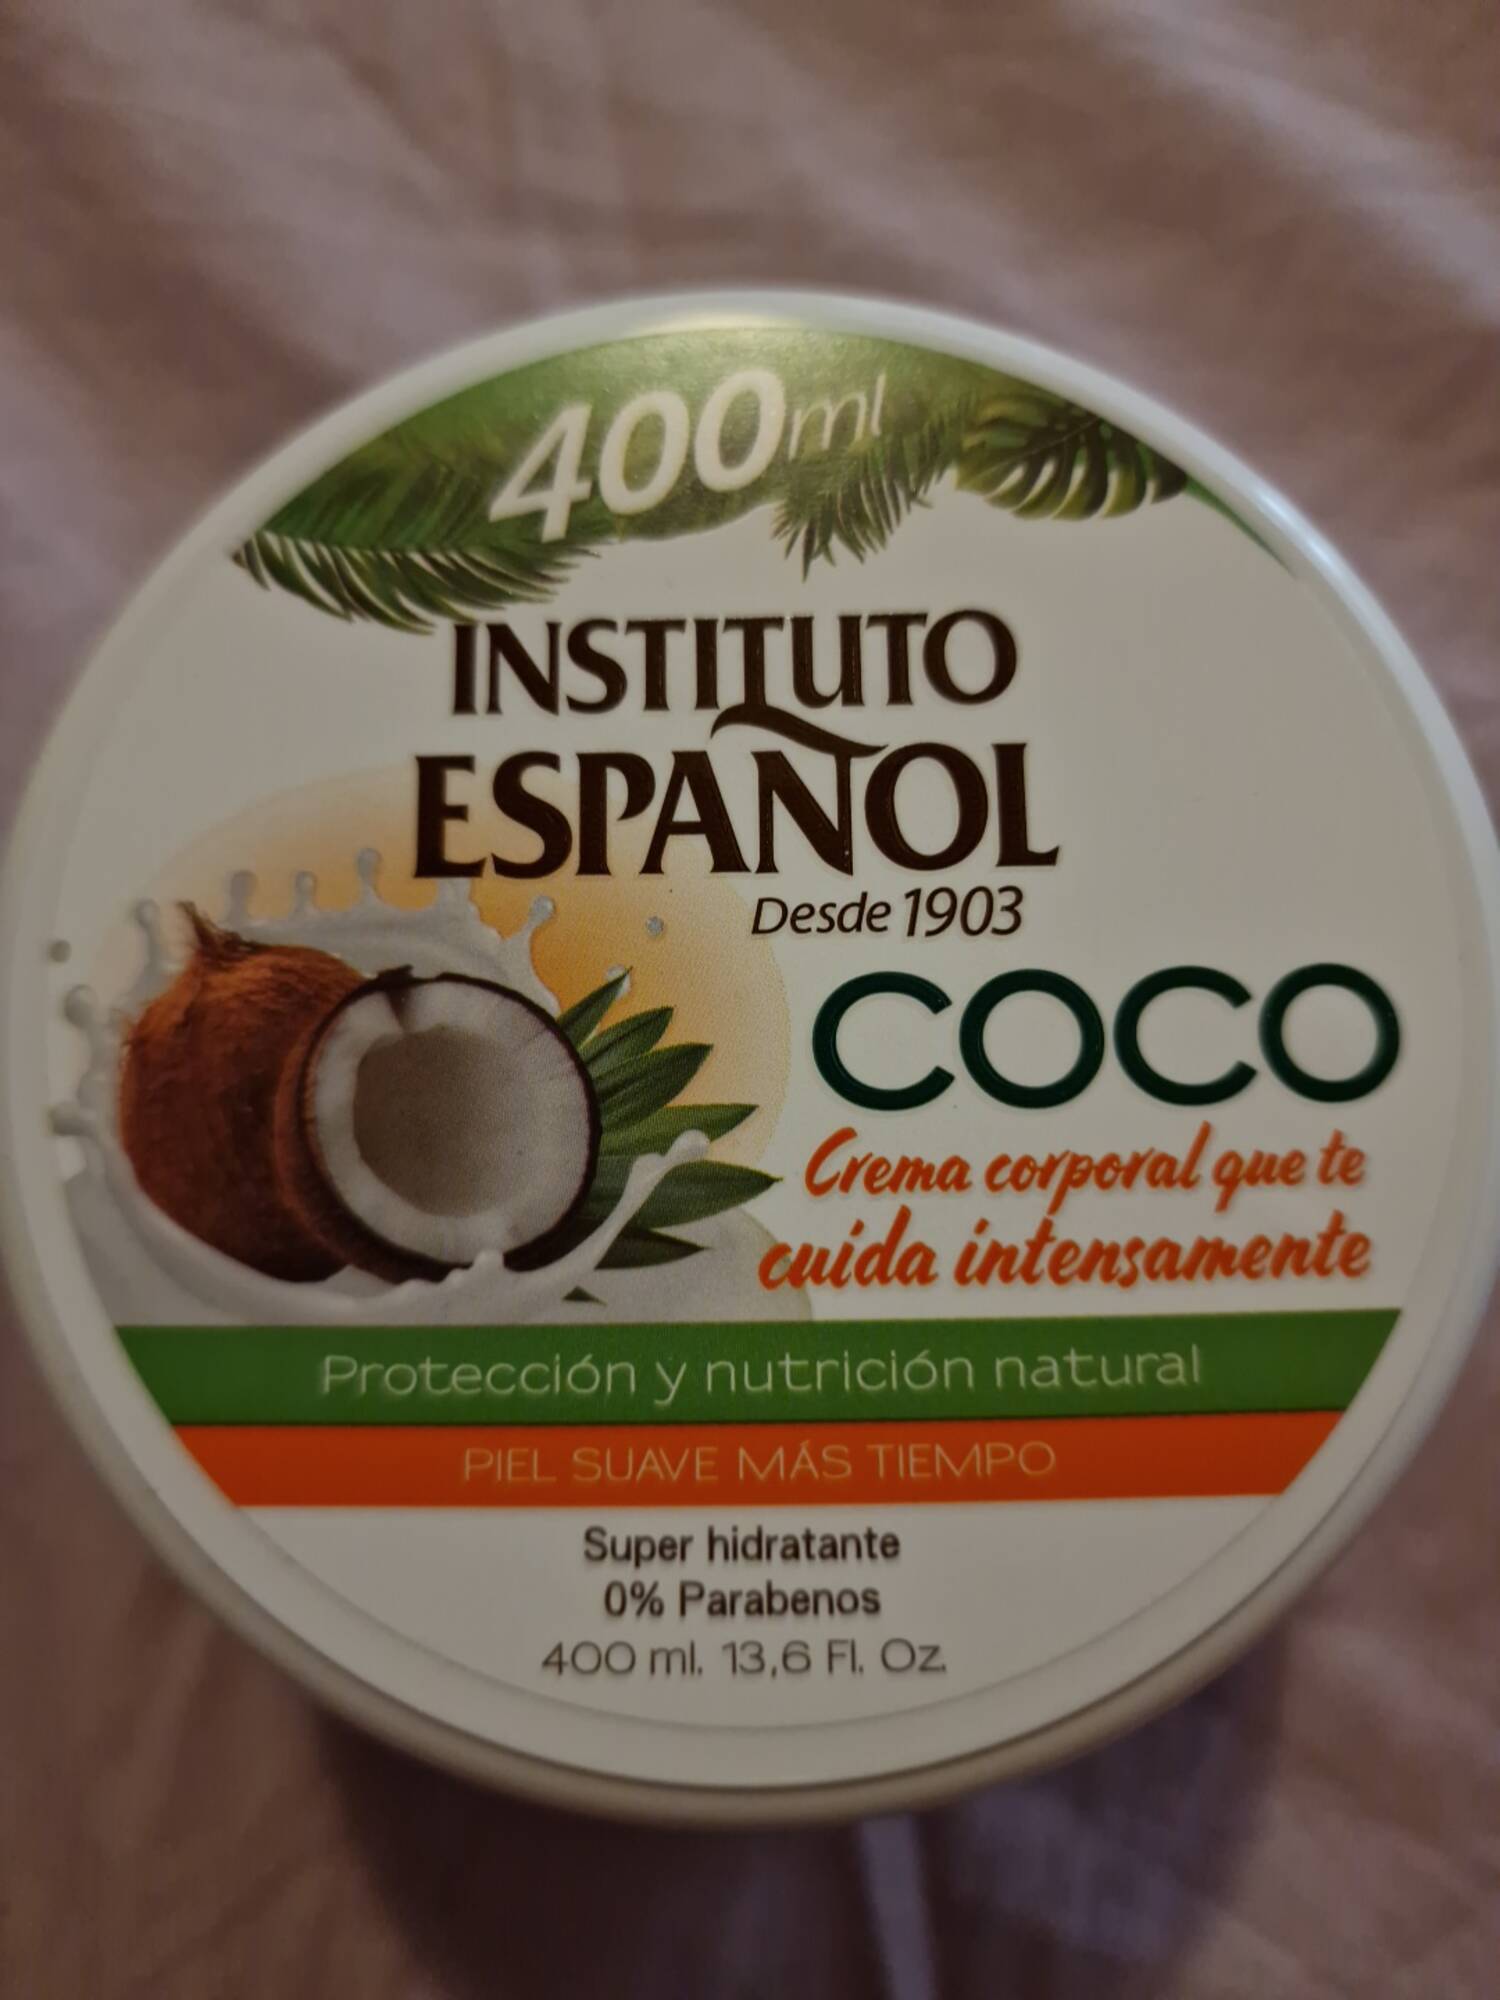 INSTITUTO ESPANOL - Crema corporal que te cuida intensamente